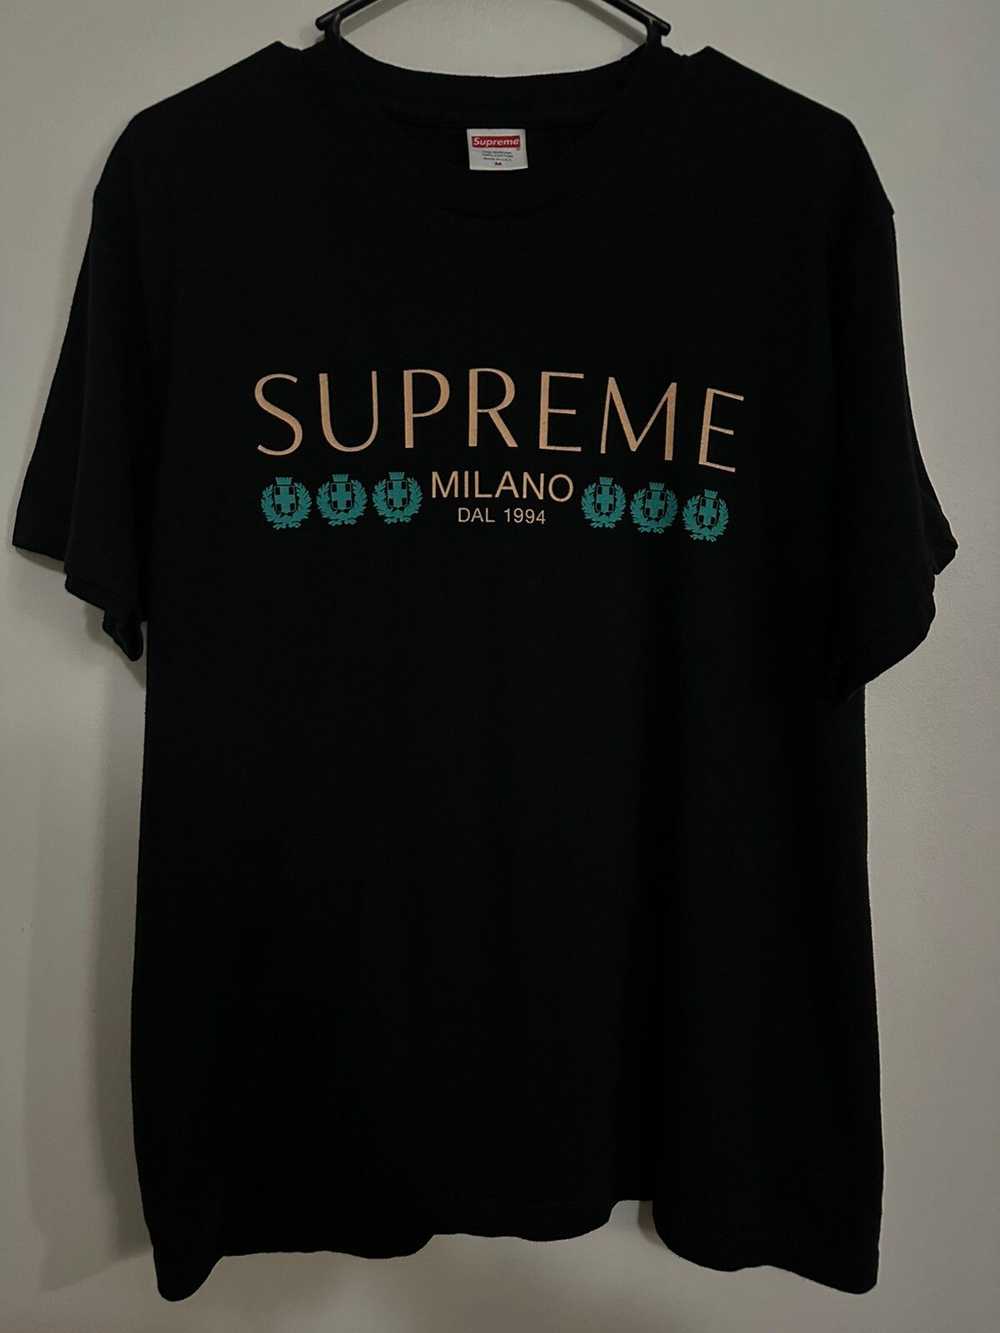 Supreme Supreme Milano Tee - image 1